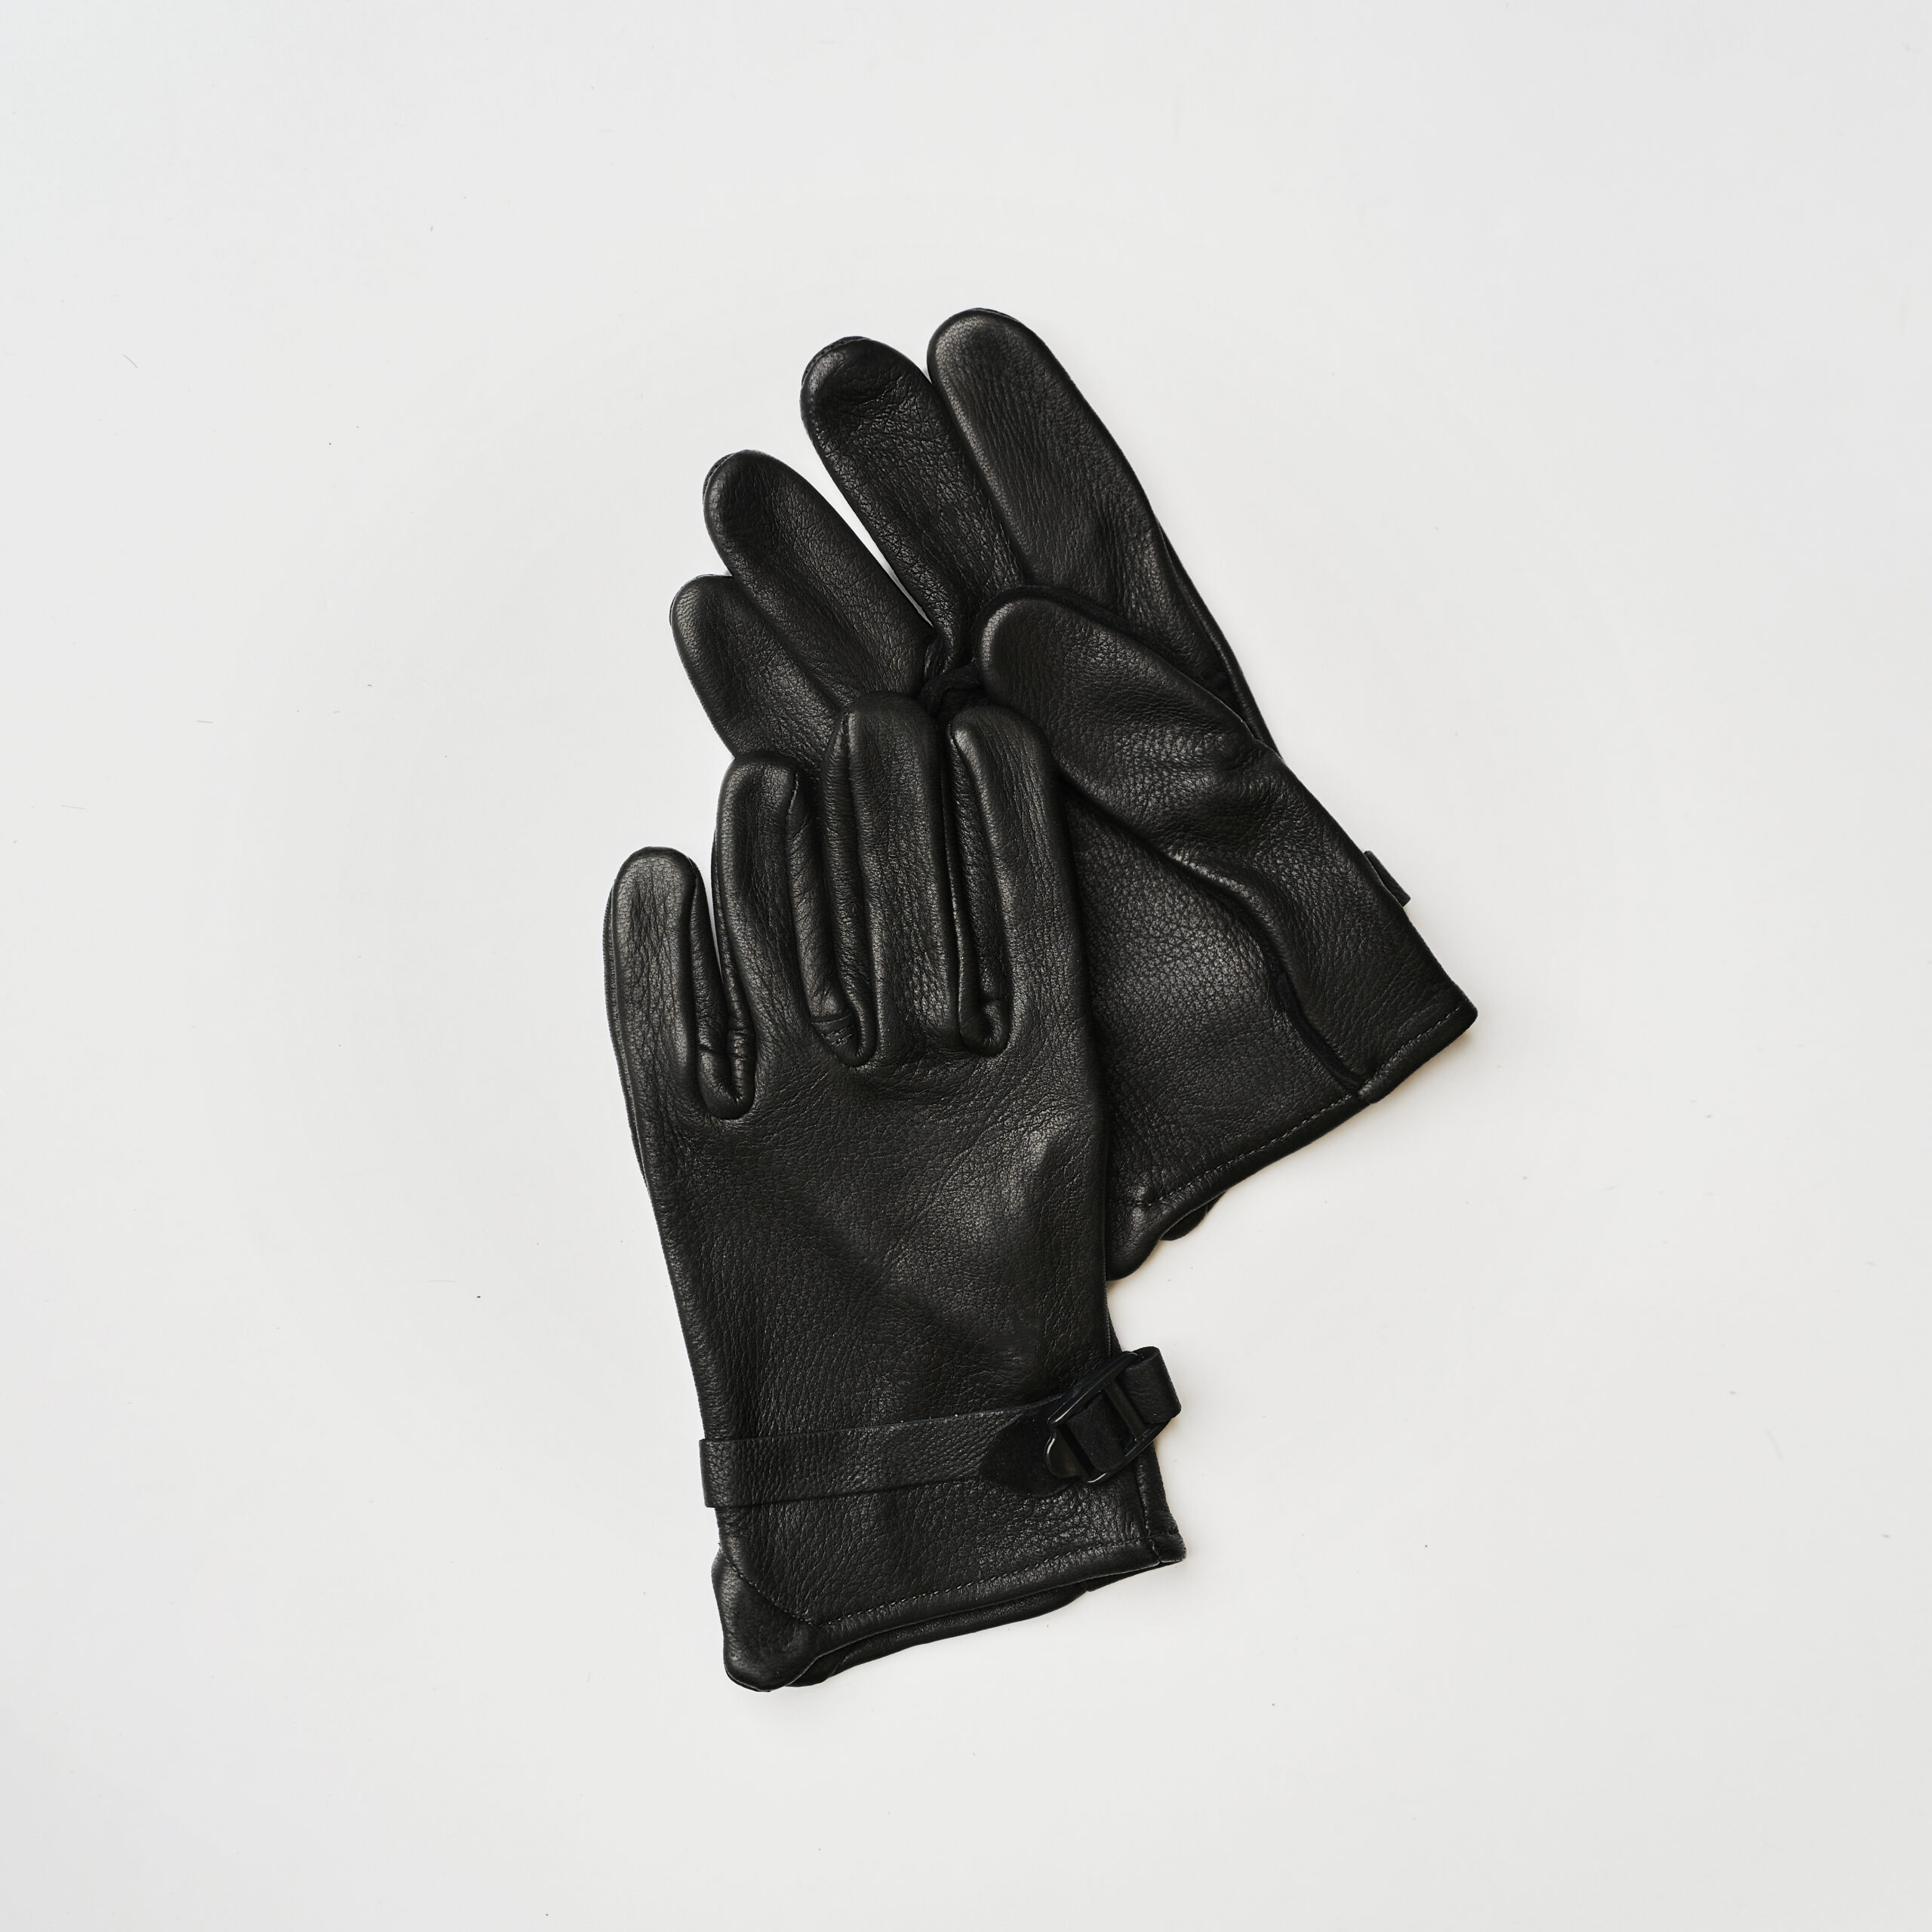 Klincher Unlined - Raber Glove Manufacturing Co. Ltd.